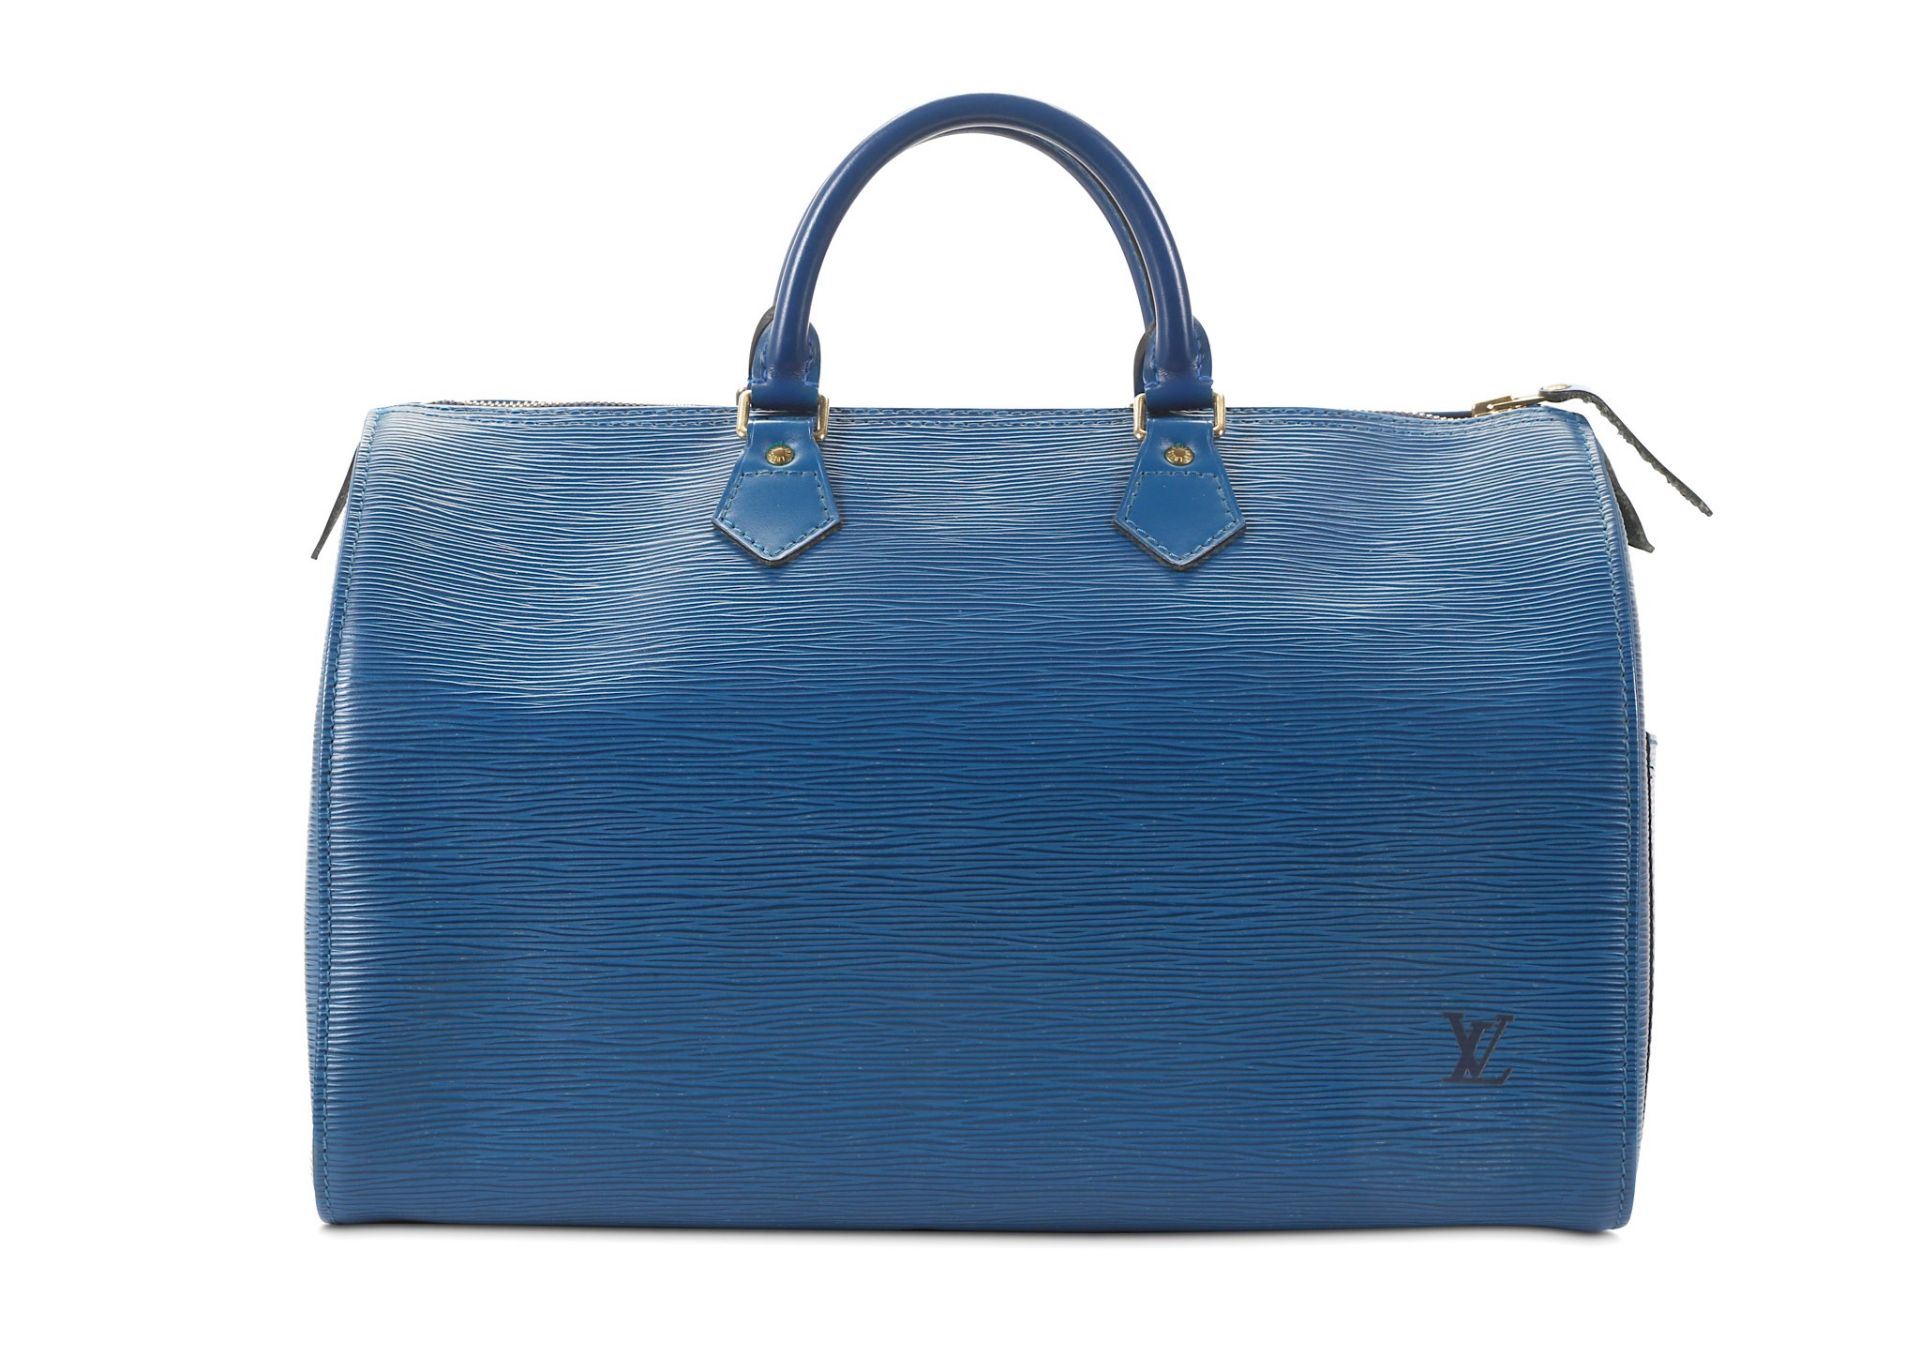 Louis Vuitton Blue Epi Speedy 35, c. 1994, 38cm wide, 24cm high Condition Grade A- Please refer to